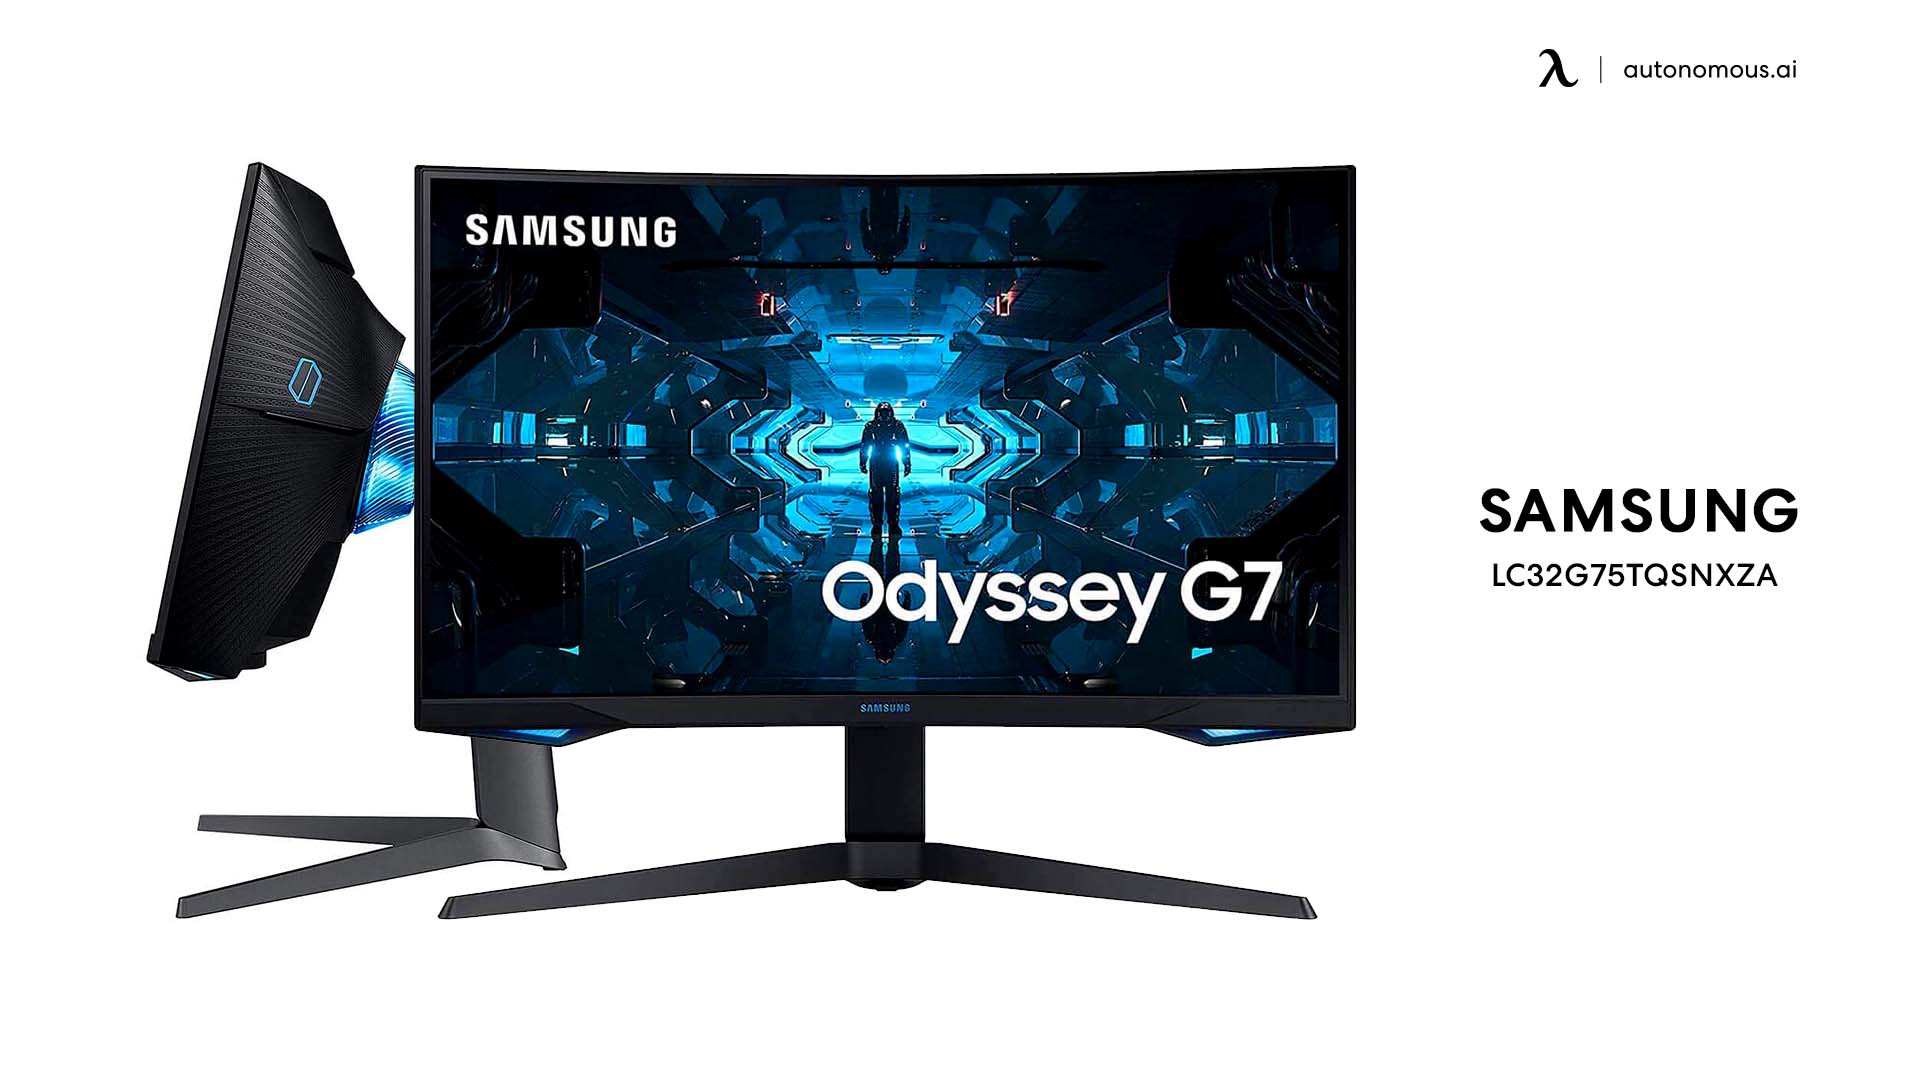 Samsung LC32G75TQSNXZA 32-inch gaming monitor